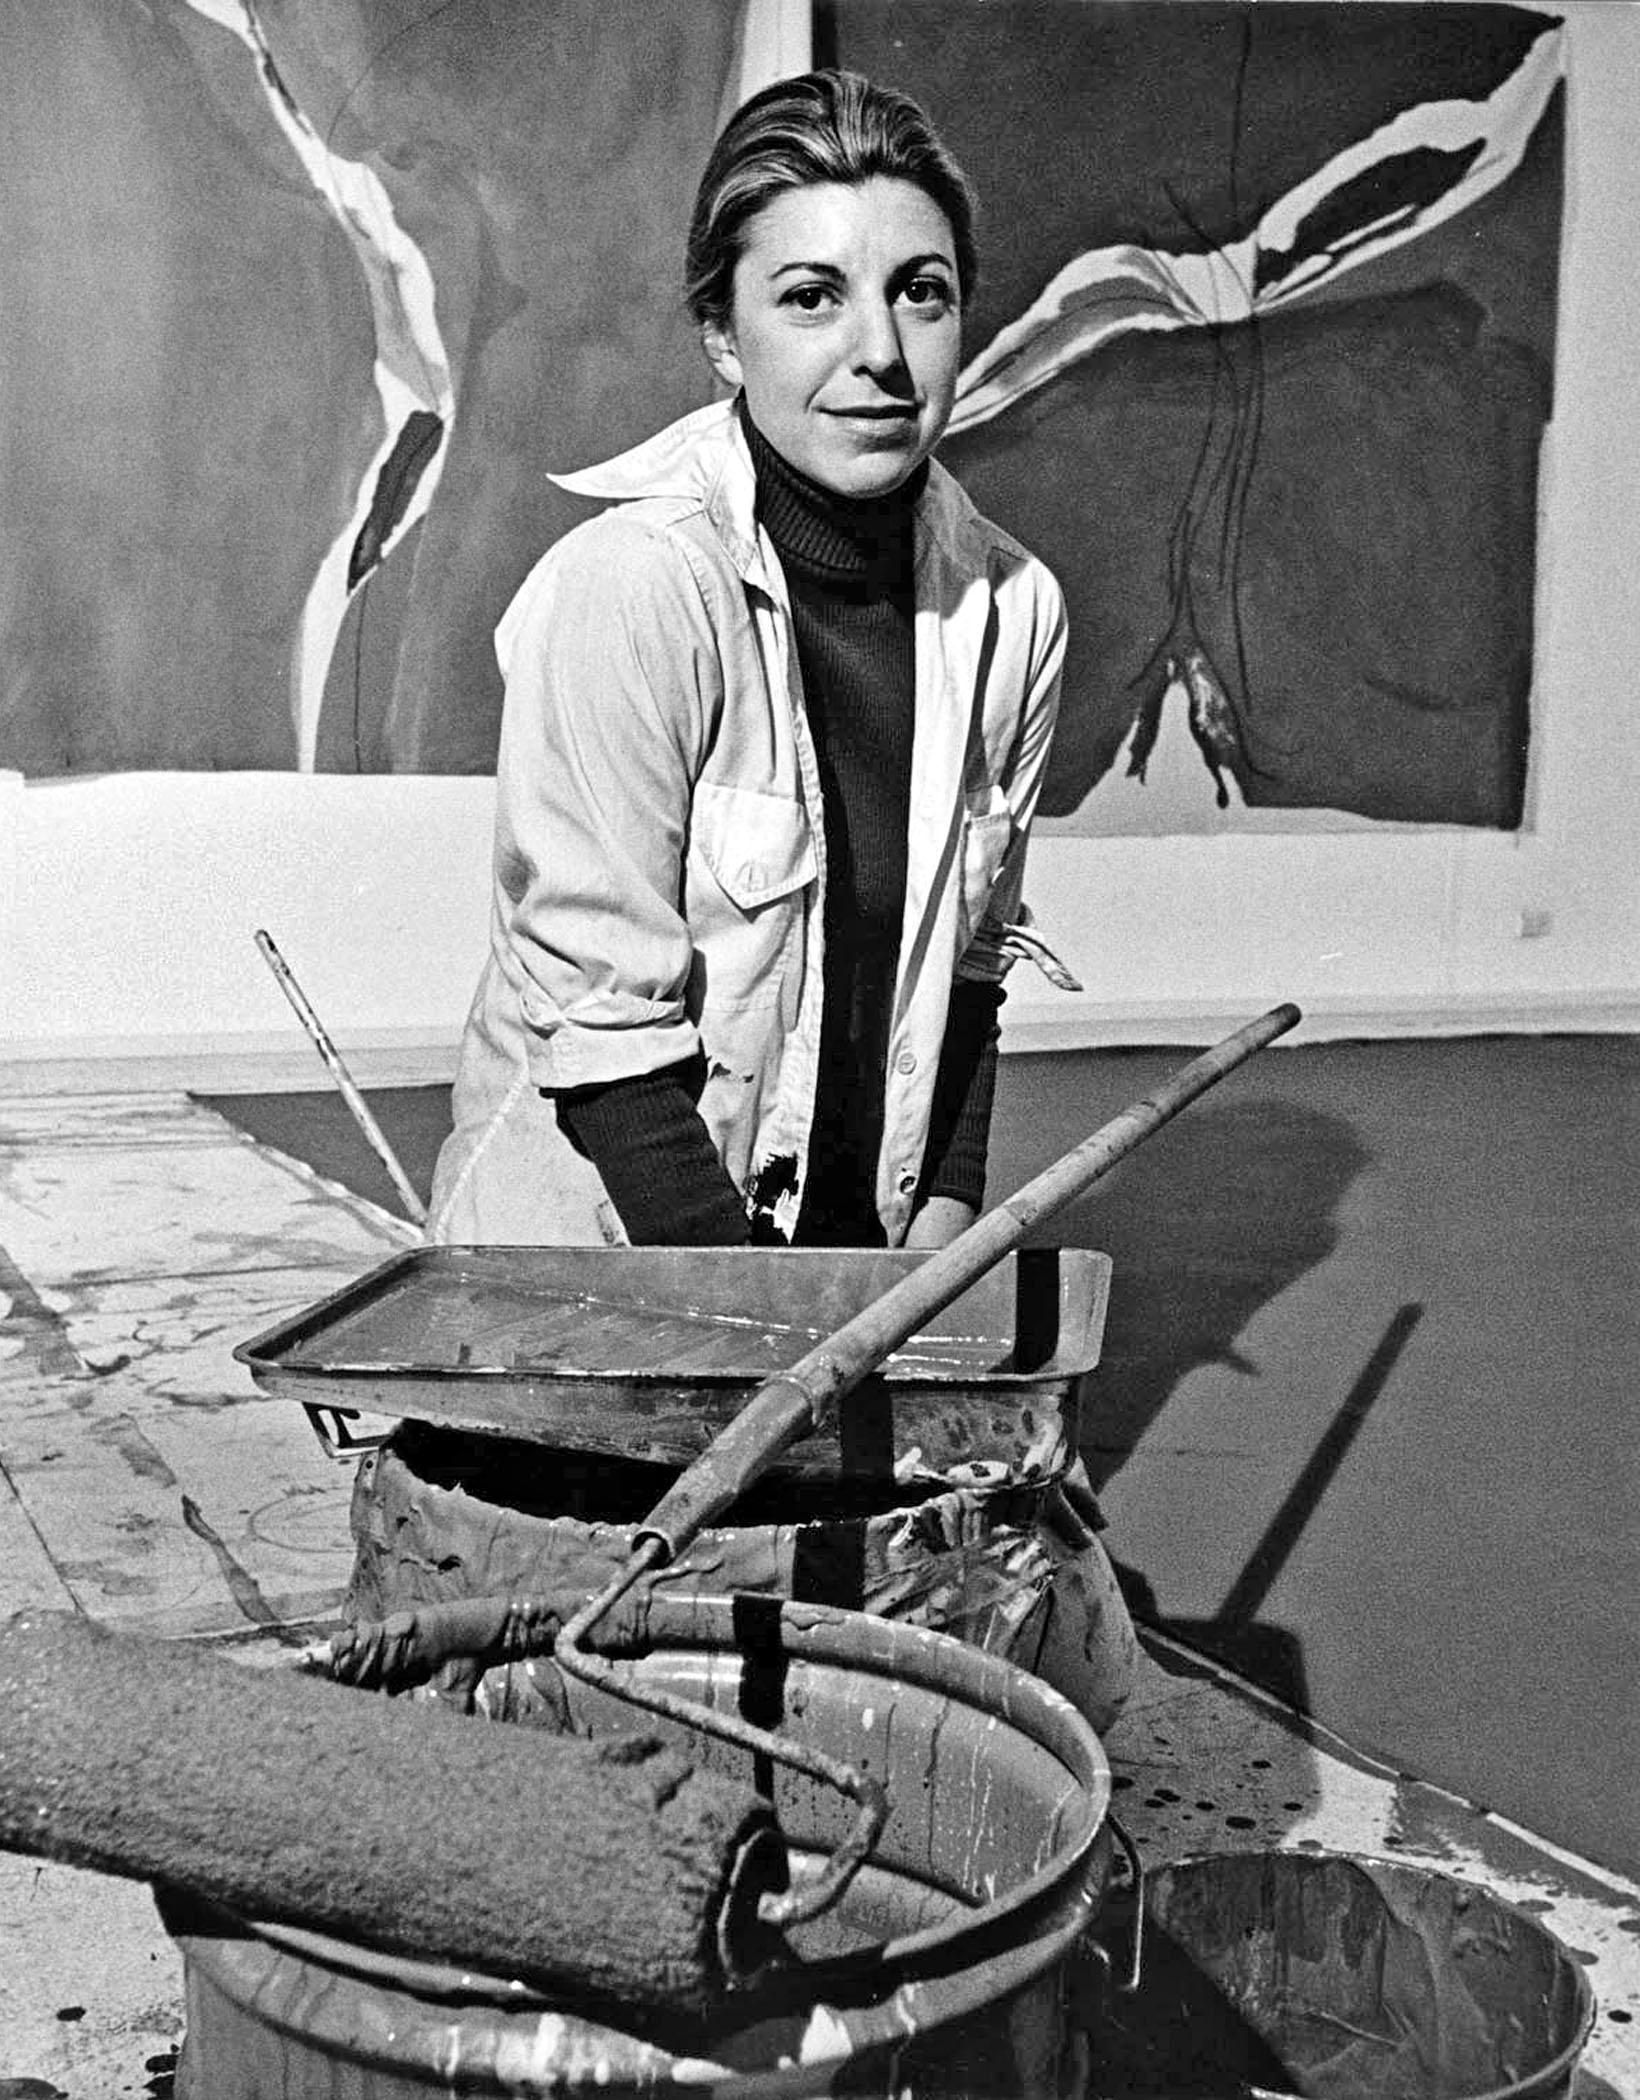 Artist Helen Frankenthaler with her recent work, signed by Jack Mitchell